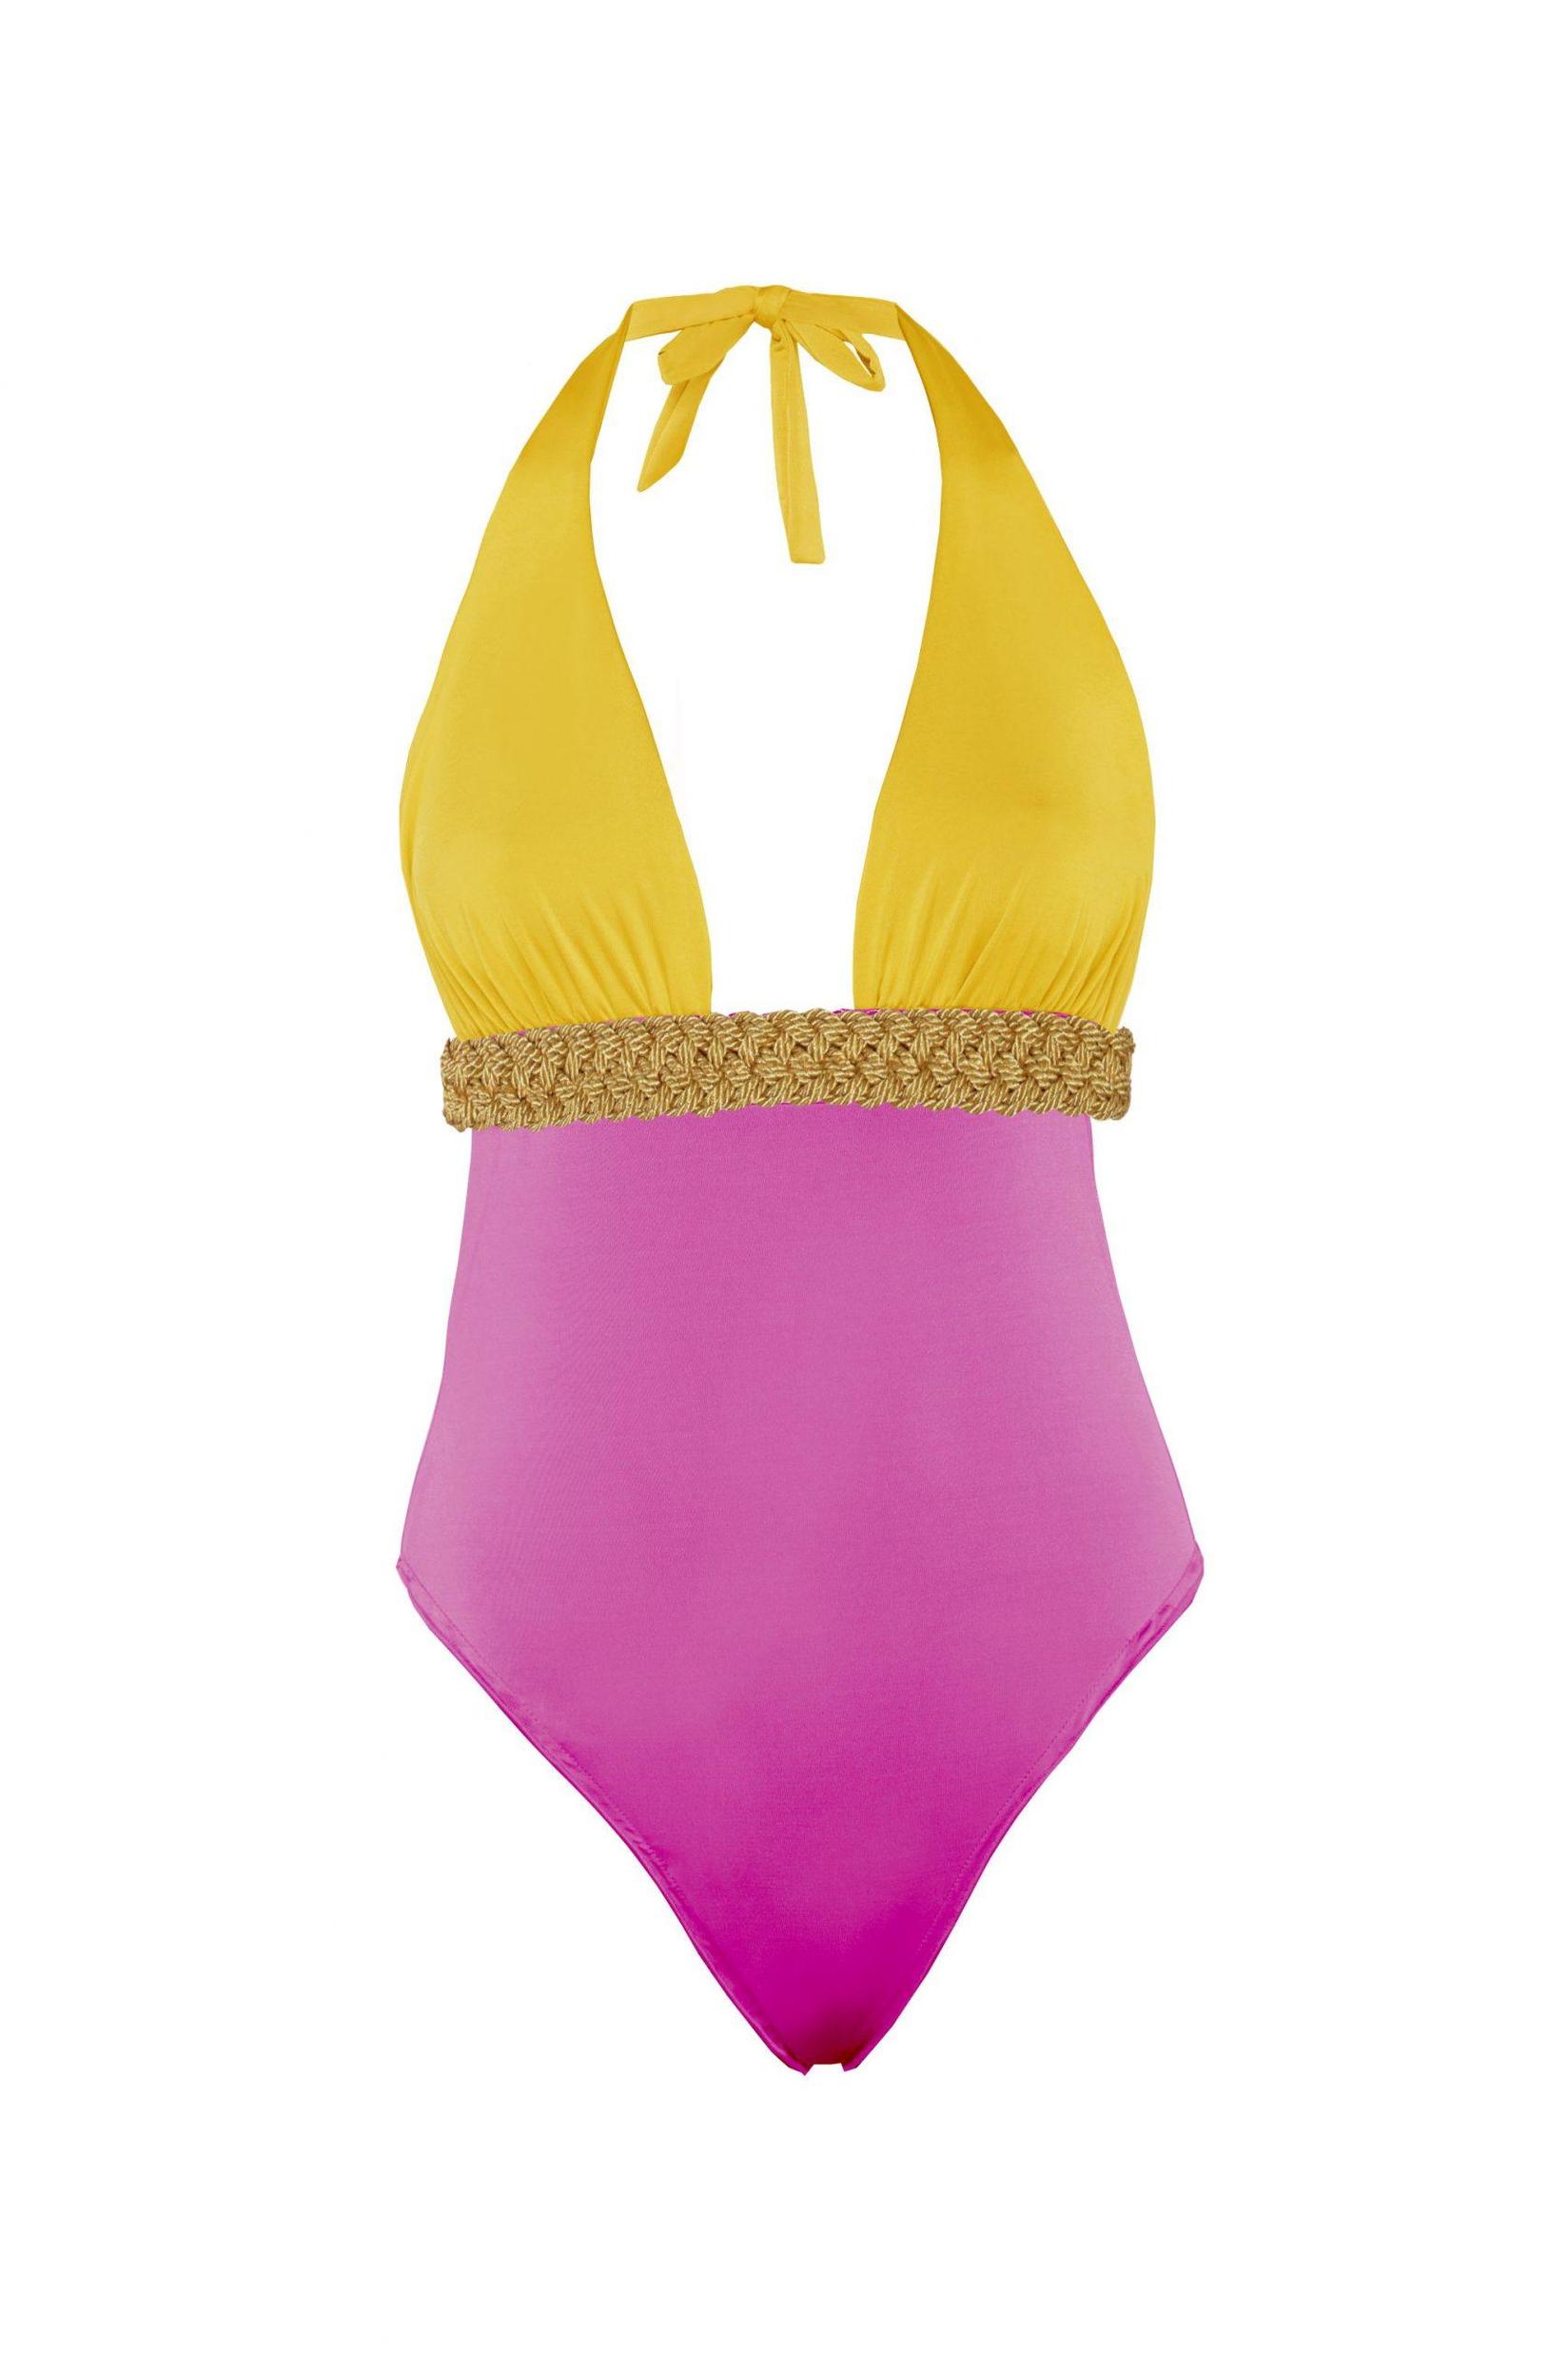 Selected image for DEVI COLLECTION Ženski jednodelni kupaći kostim Devi ljubičasti